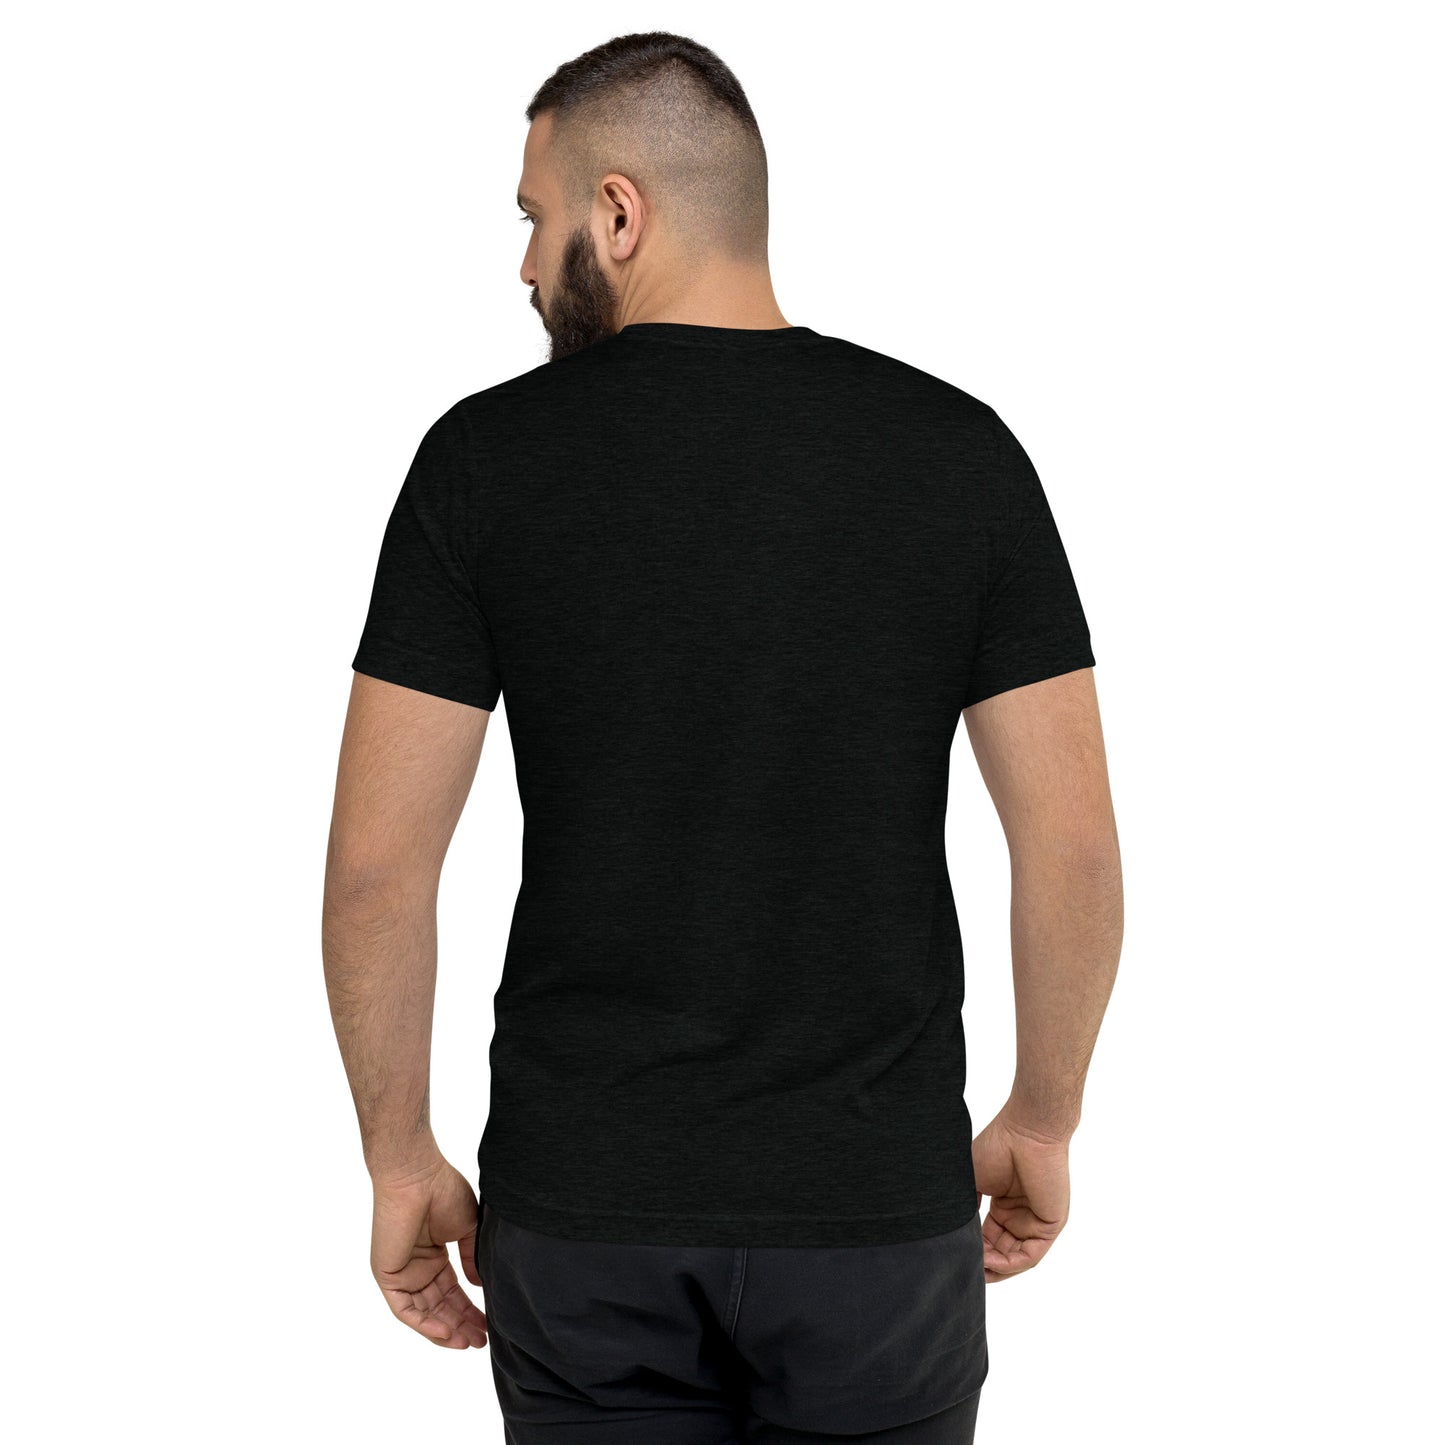 "America Needs Main Streets" Unisex Short Sleeve T-shirt